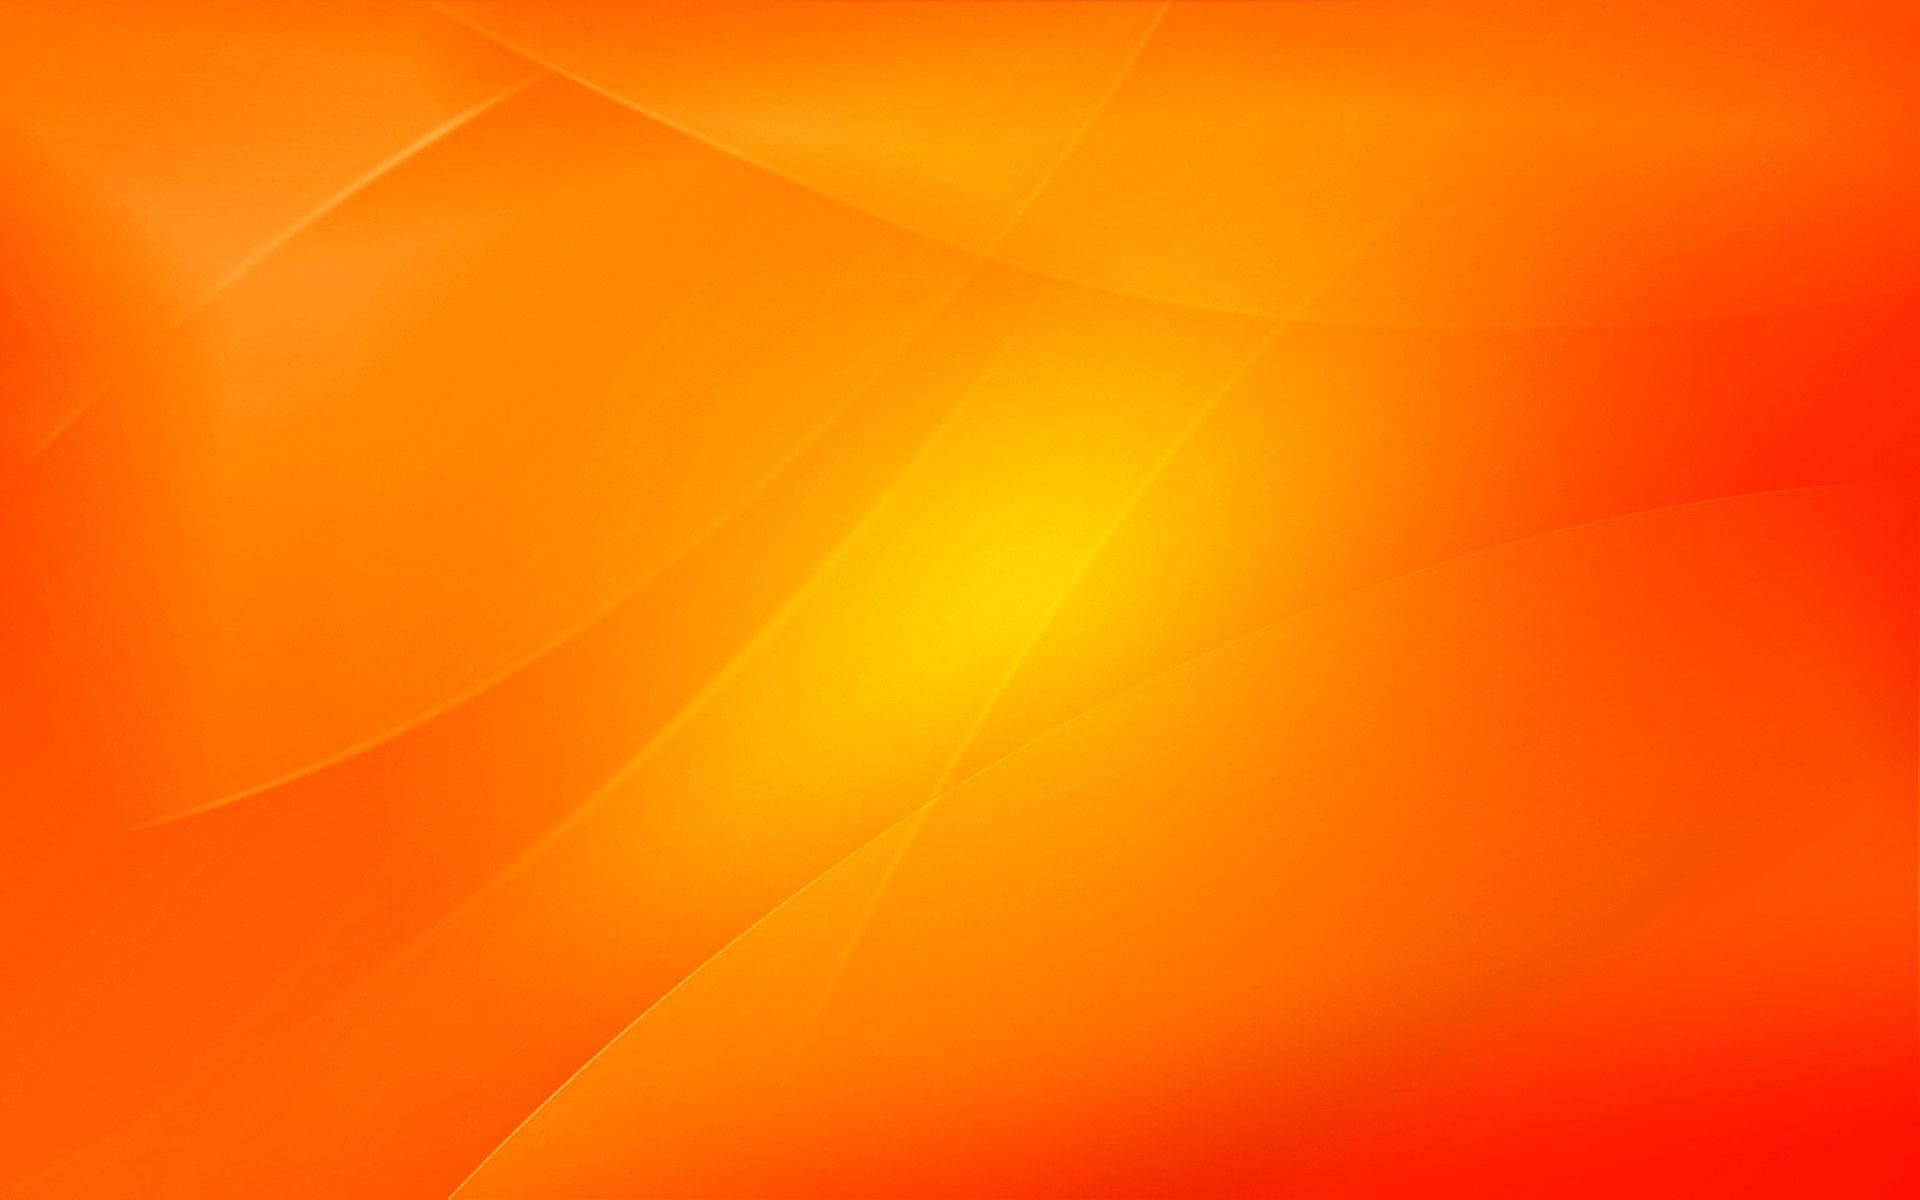 Illuminated Red Orange Screensaver Background